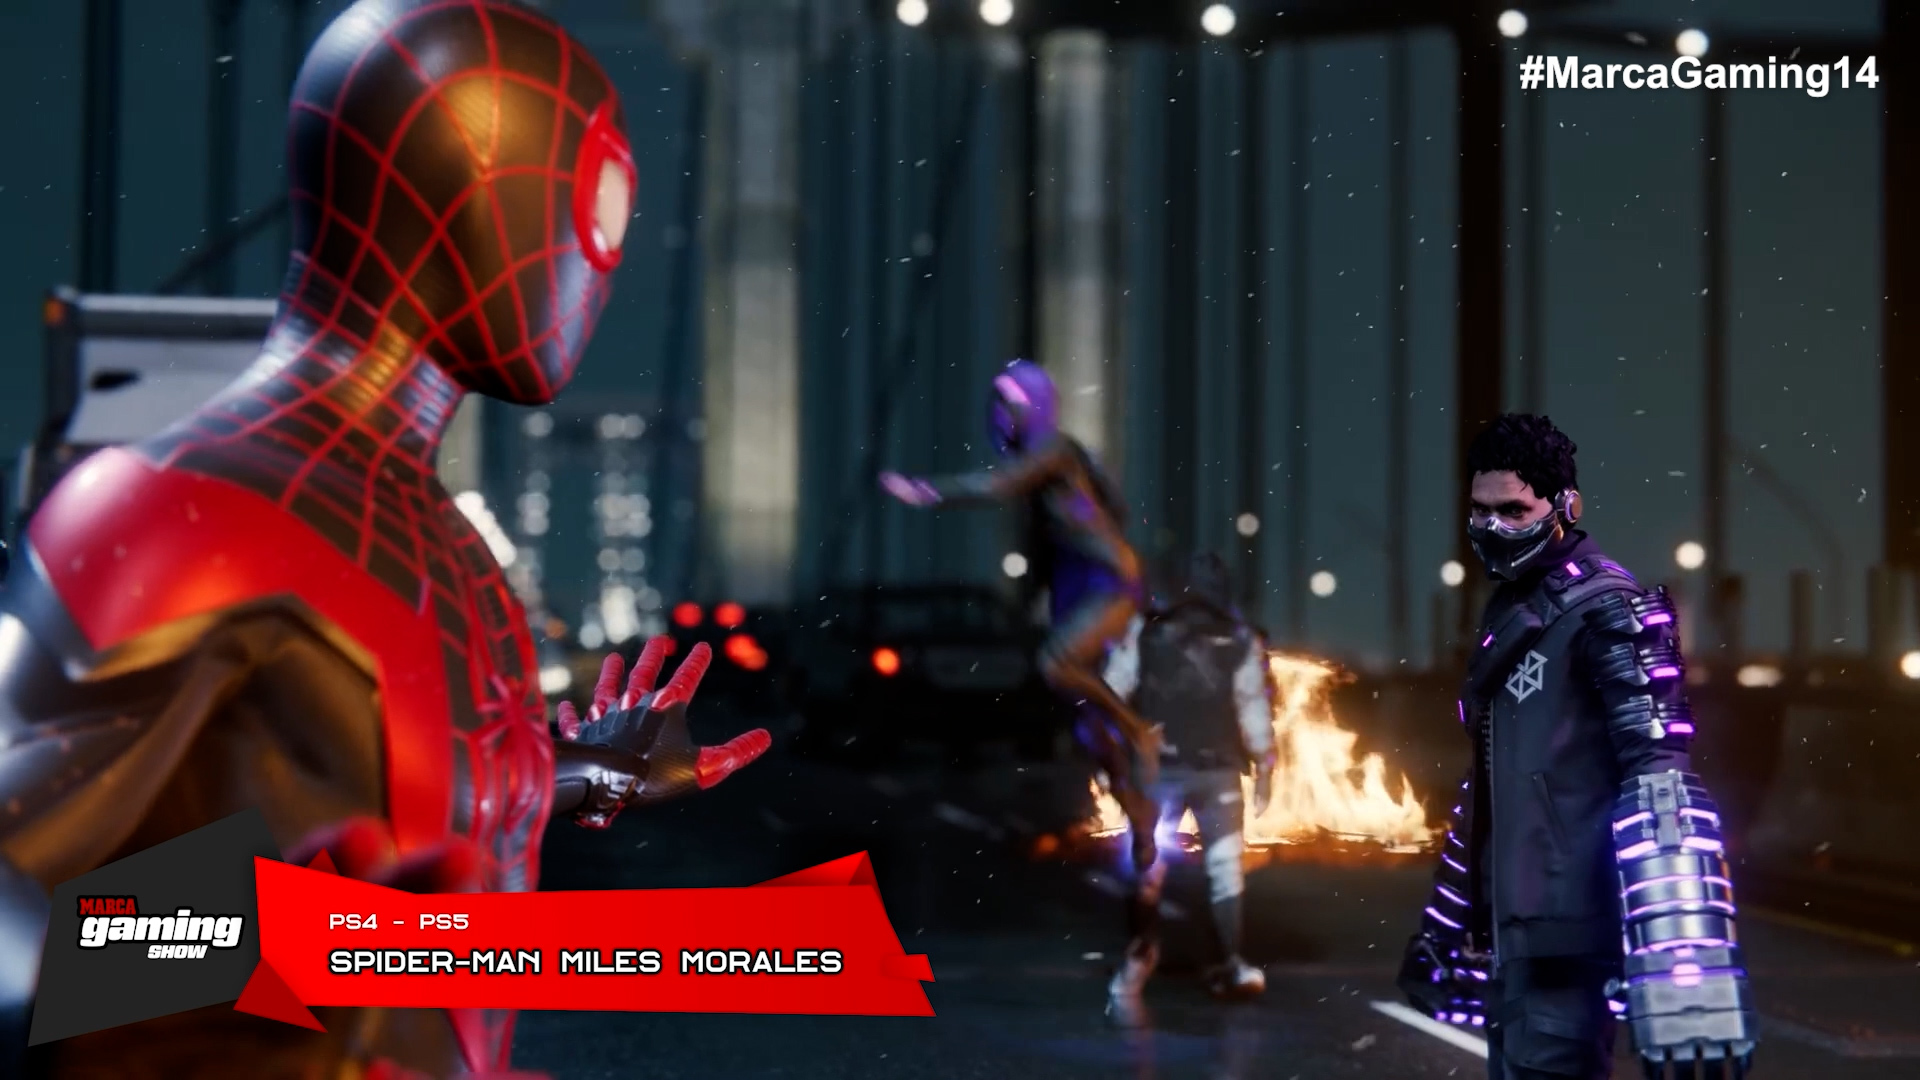 Spider-Man Miles Morales (PS4 - PS5)